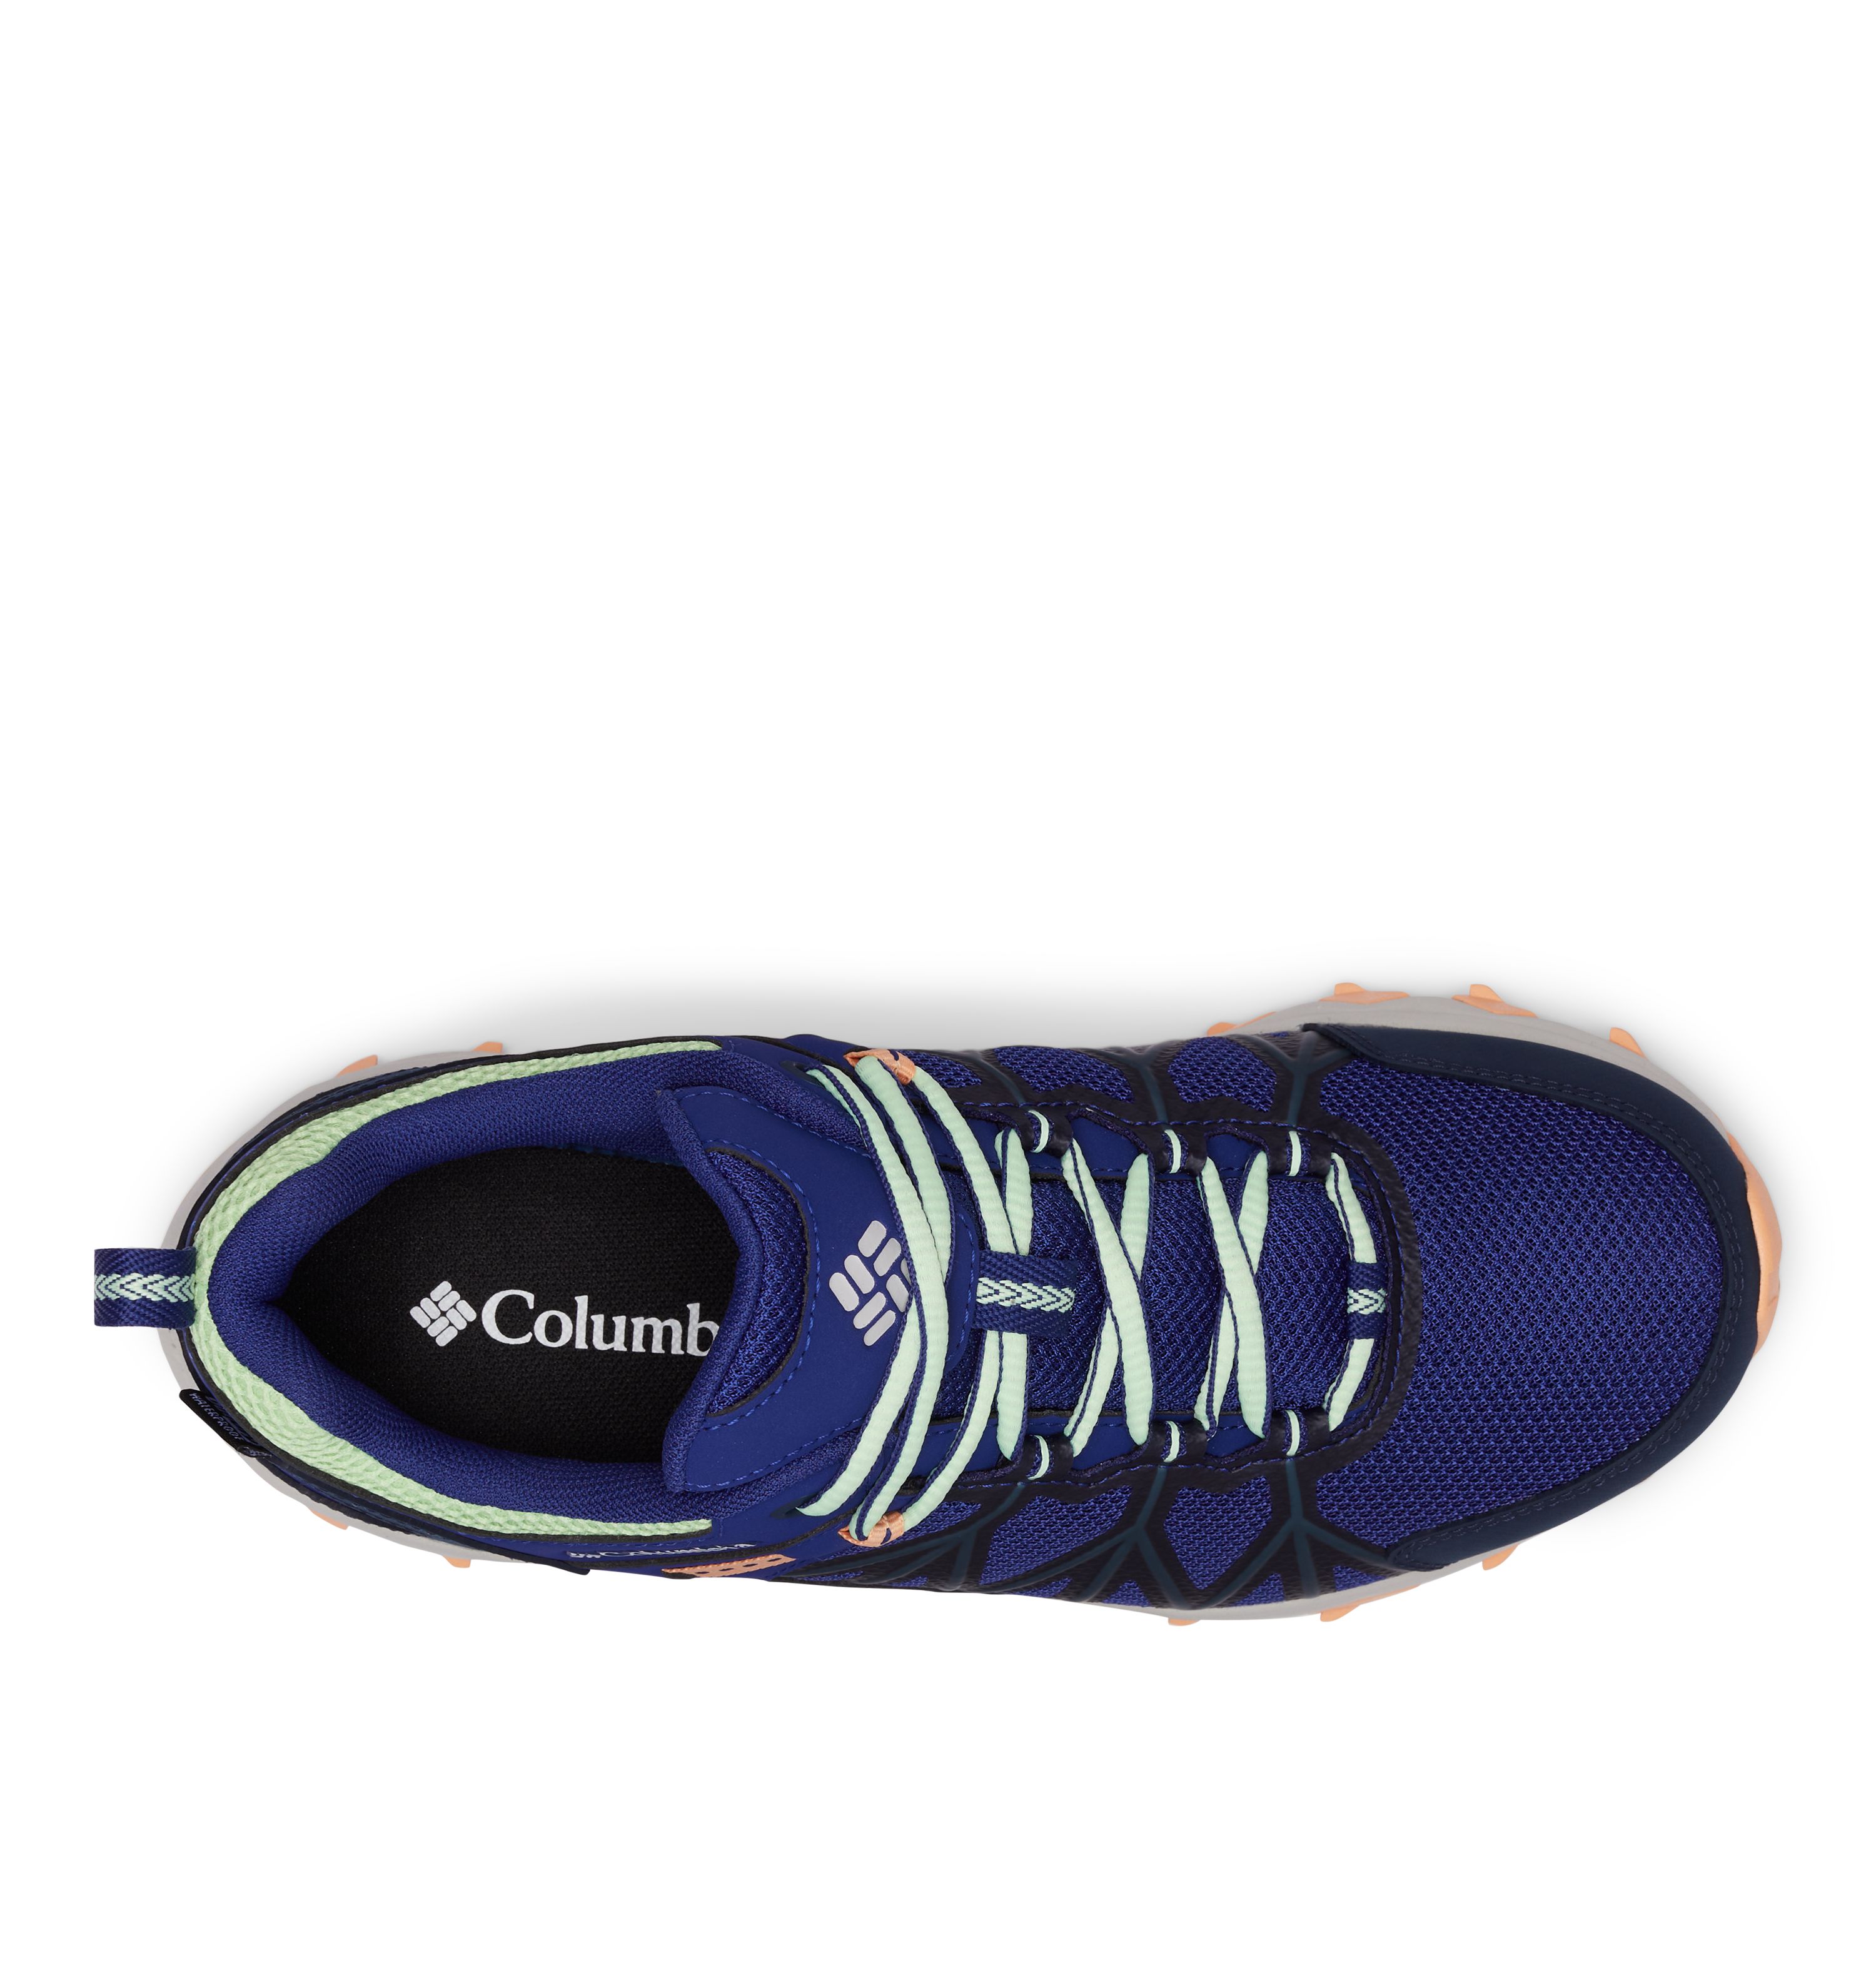 Columbia Peakfreak II Outdry Kadın Ayakkabı. 8